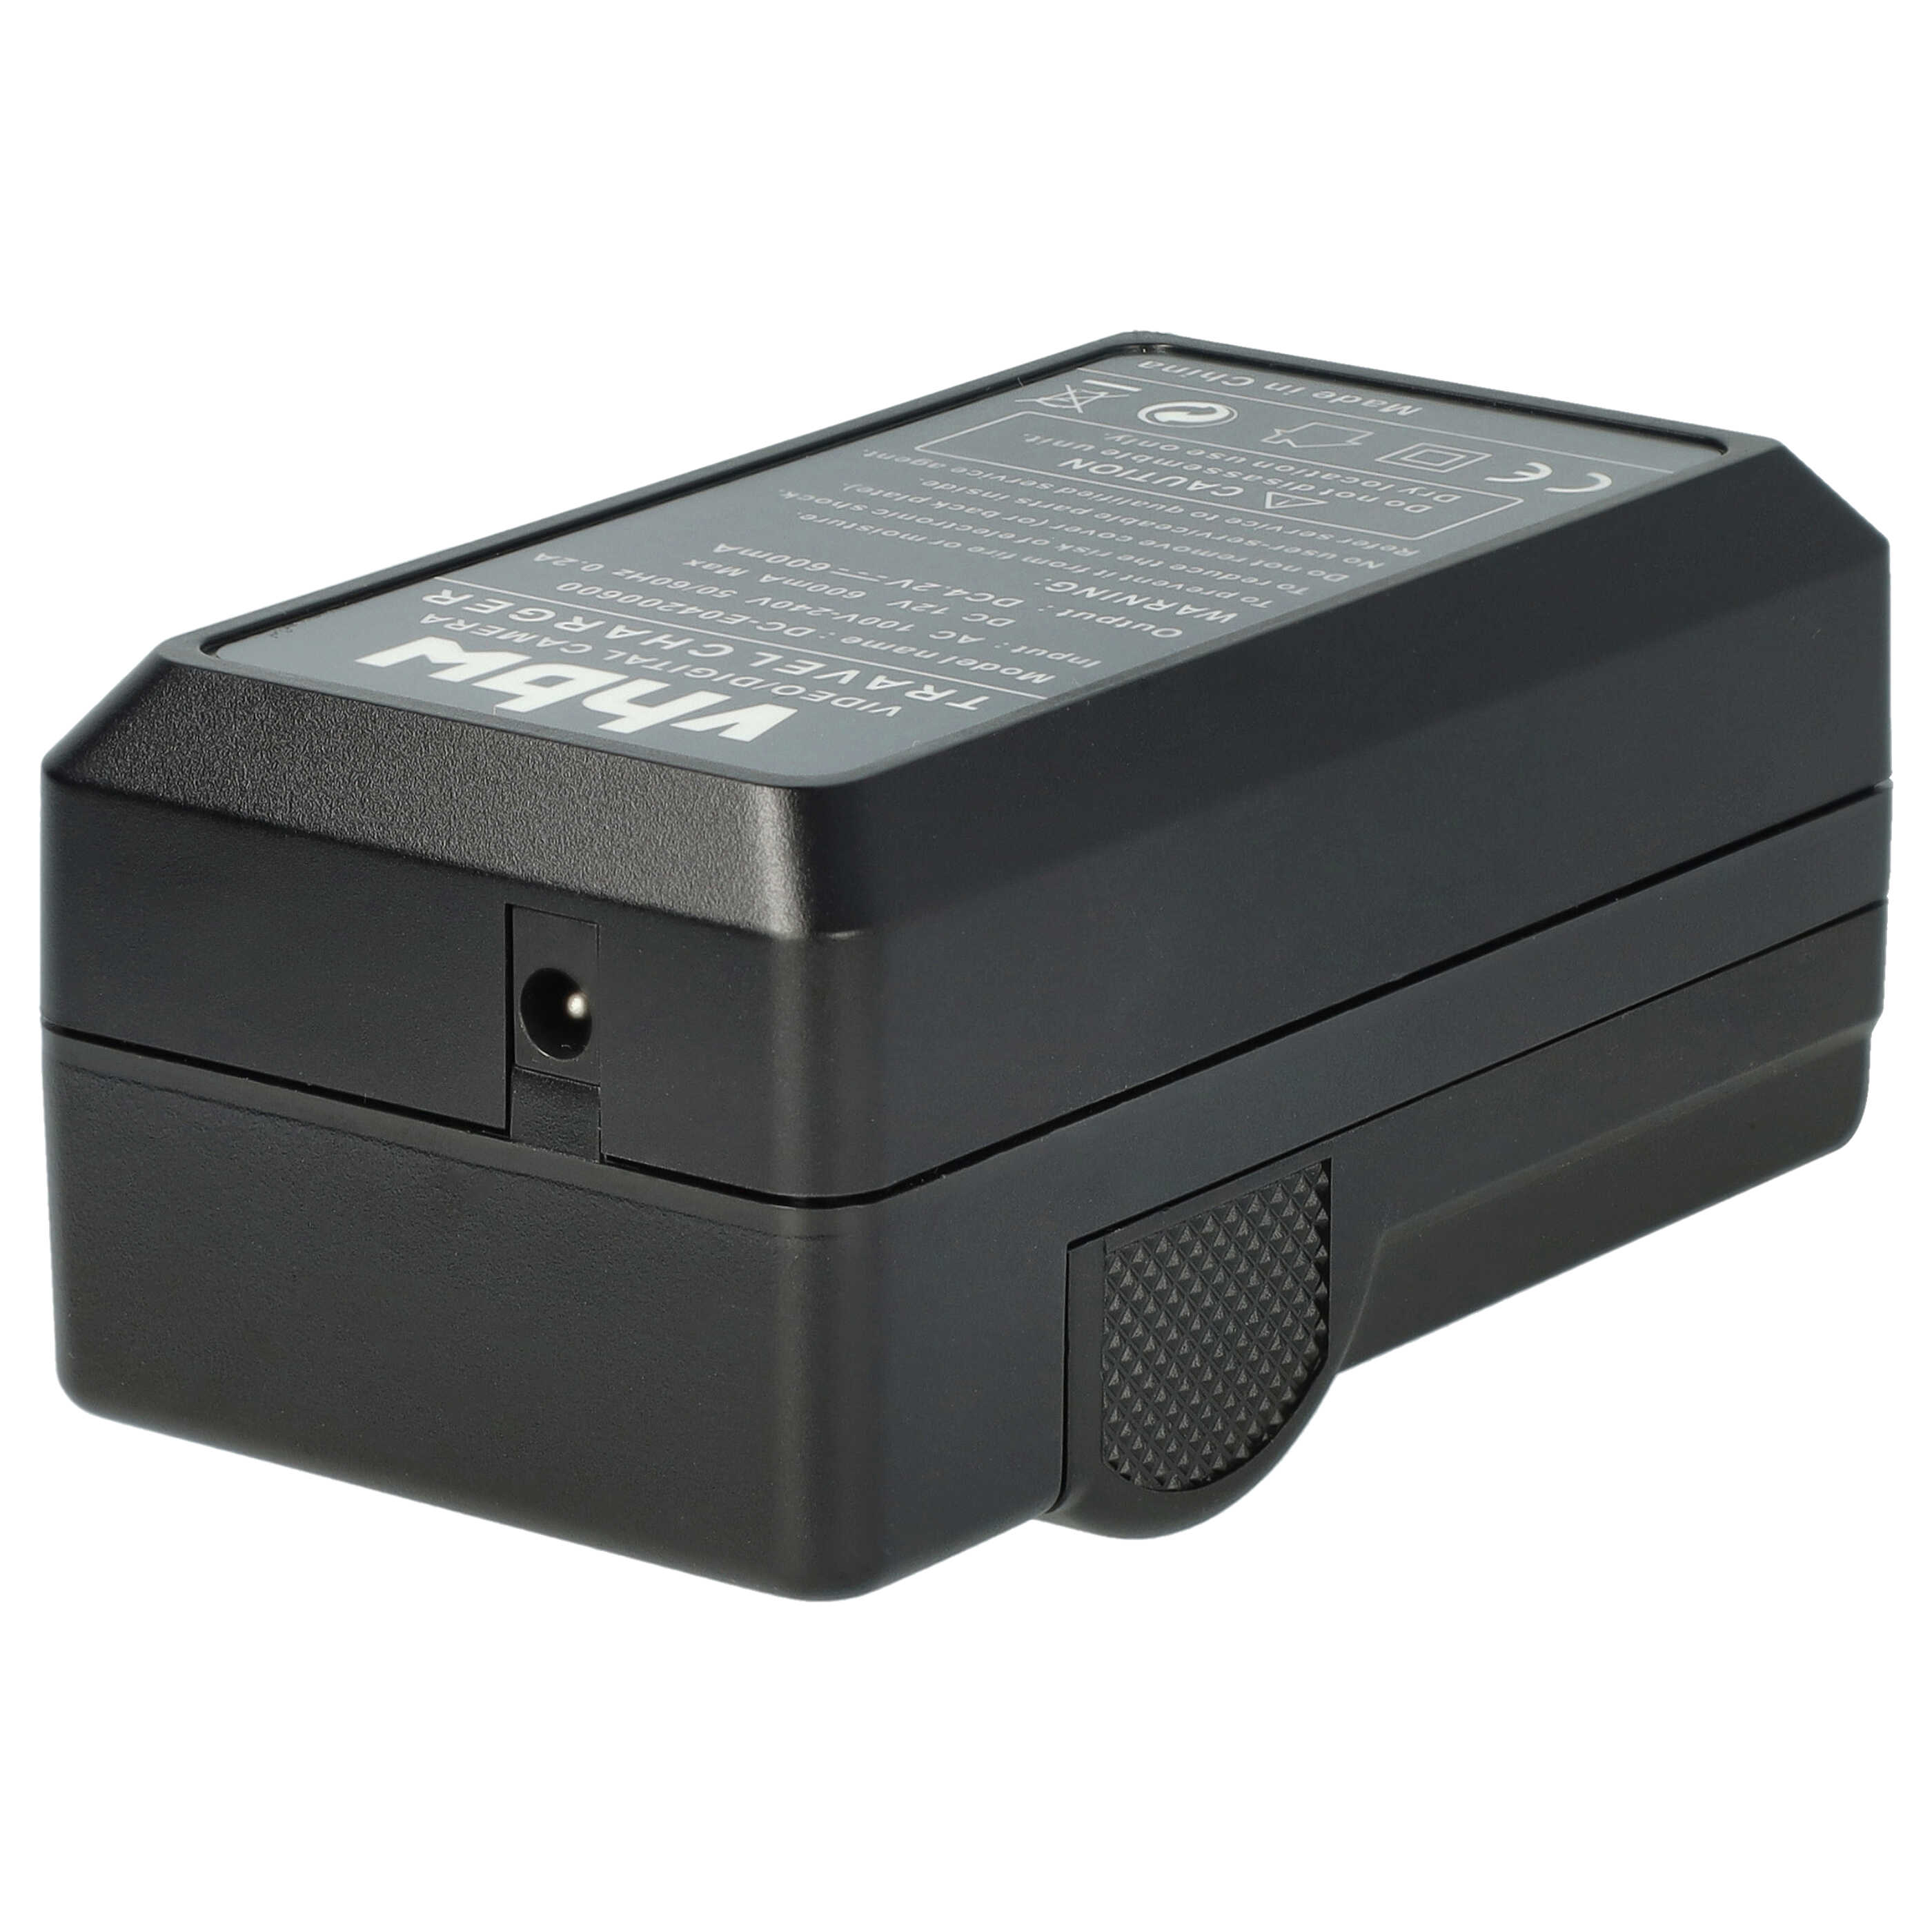 Akku Ladegerät passend für Lumix DMC-FS11 Kamera u.a. - 0,6 A, 4,2 V